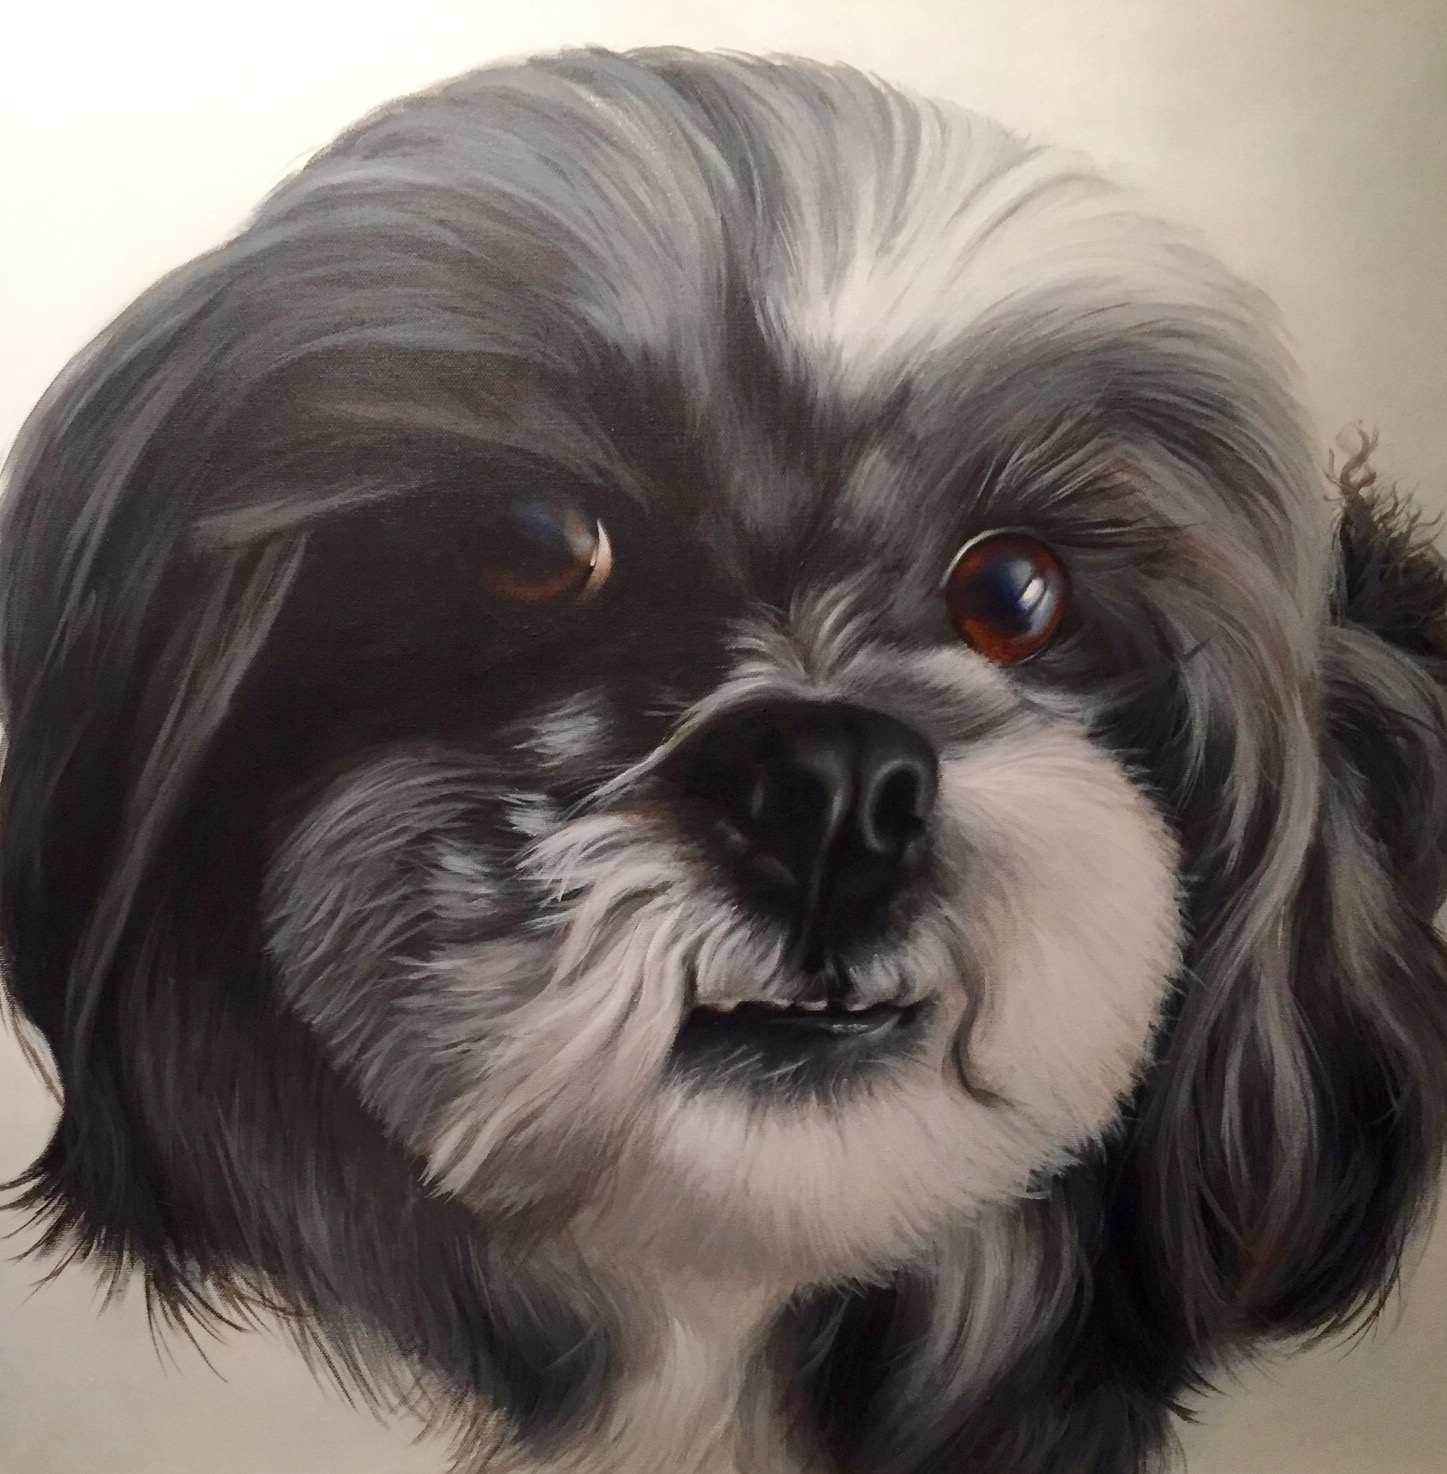 Painting schilderij portret pet portrait huisdier opdracht acryl canvas doek handpainted handgeschilderd puppy eyes cute dog hond hondje fur portretten paint acryl acrylic verf 